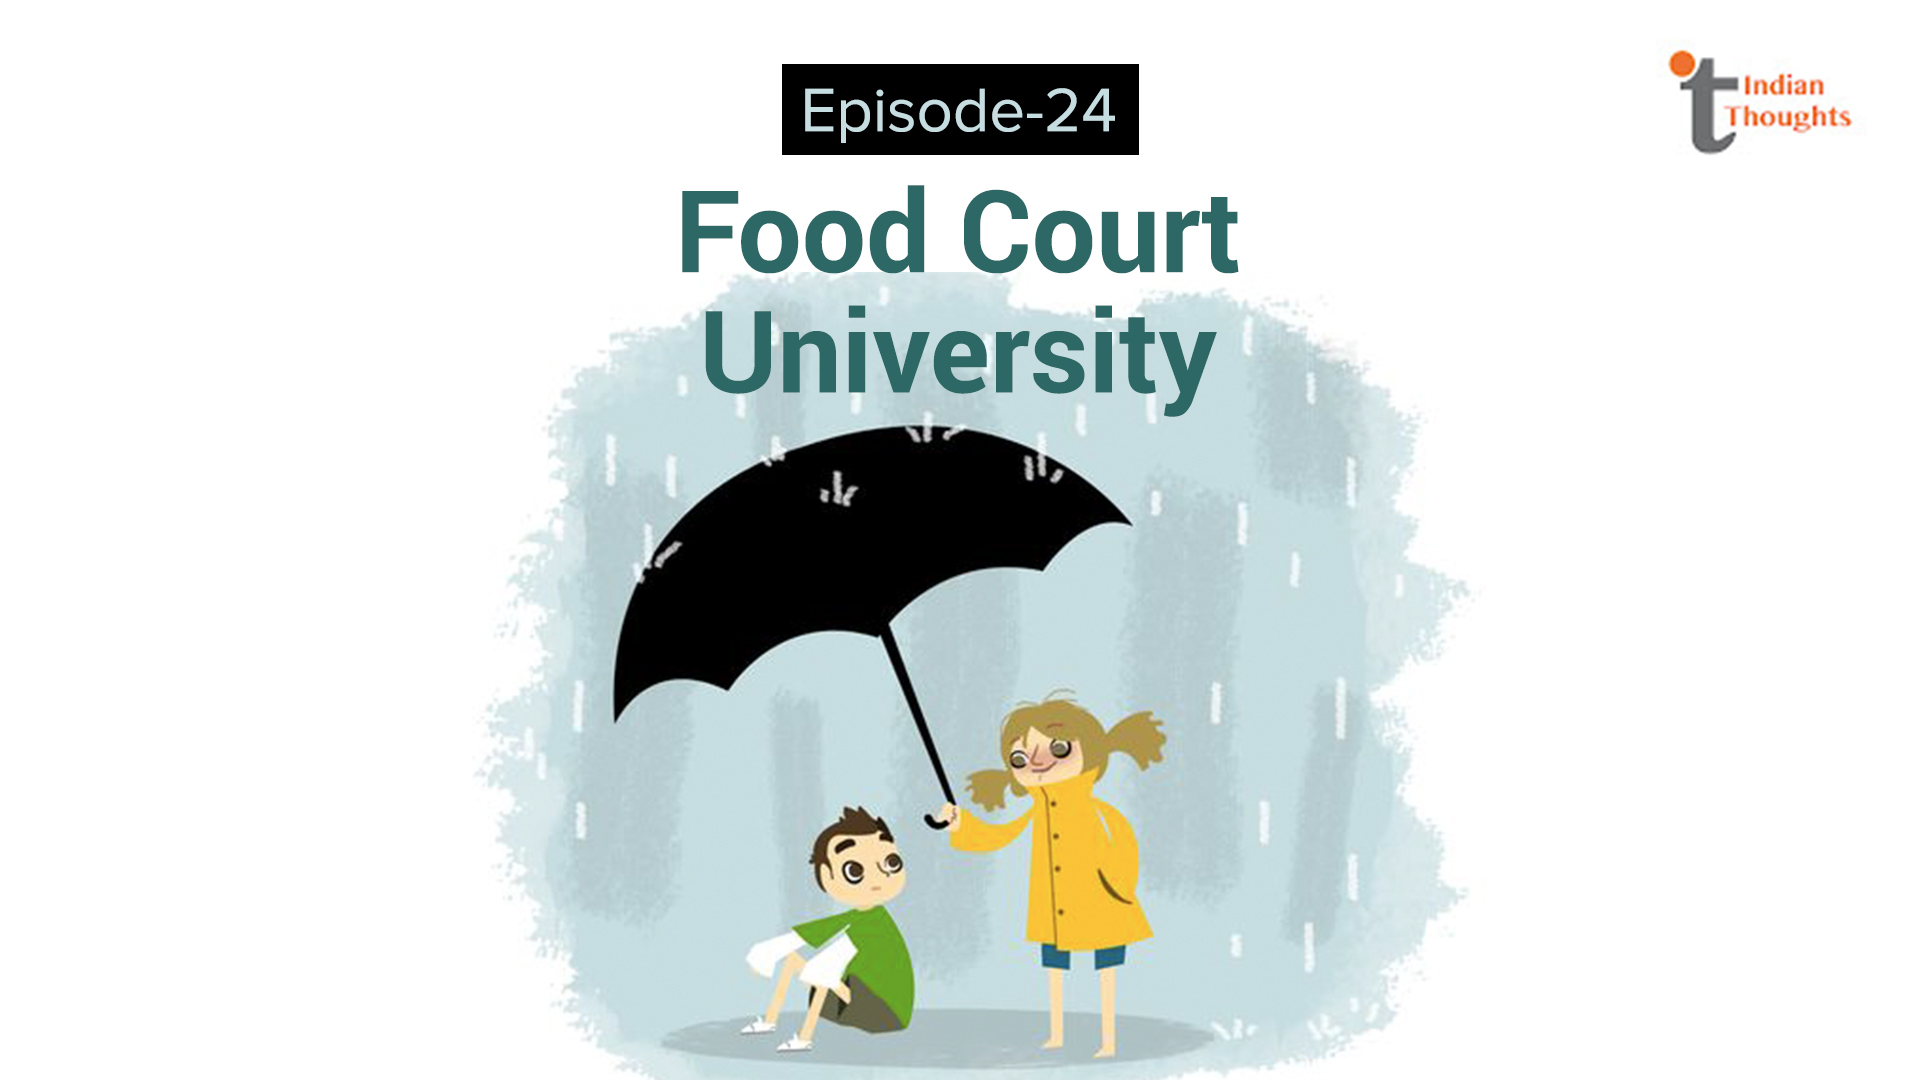 Food court University